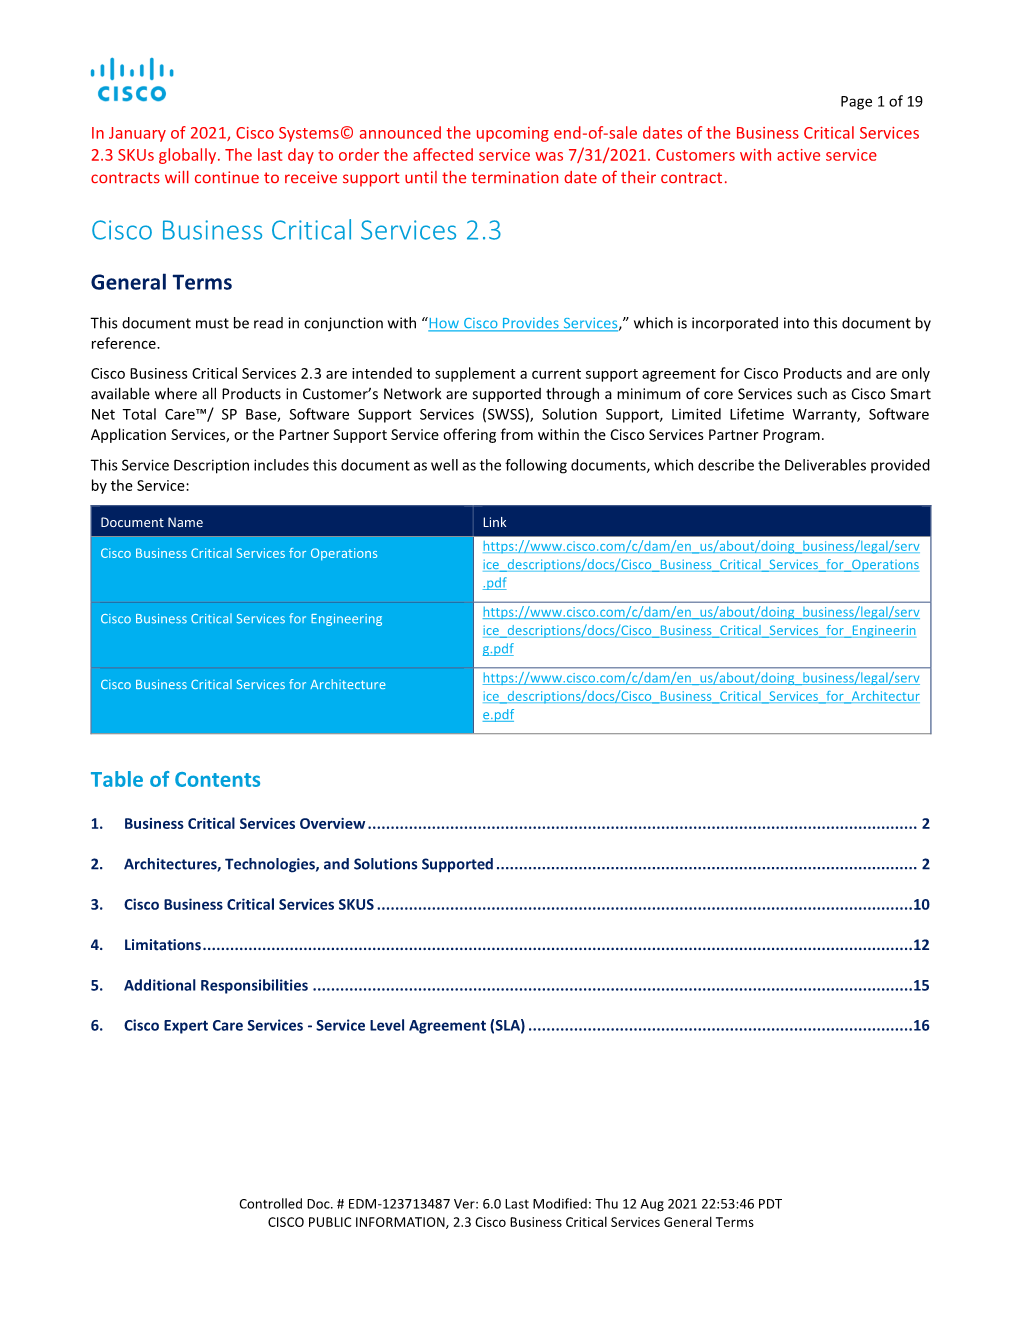 Cisco Business Critical Services 2.3